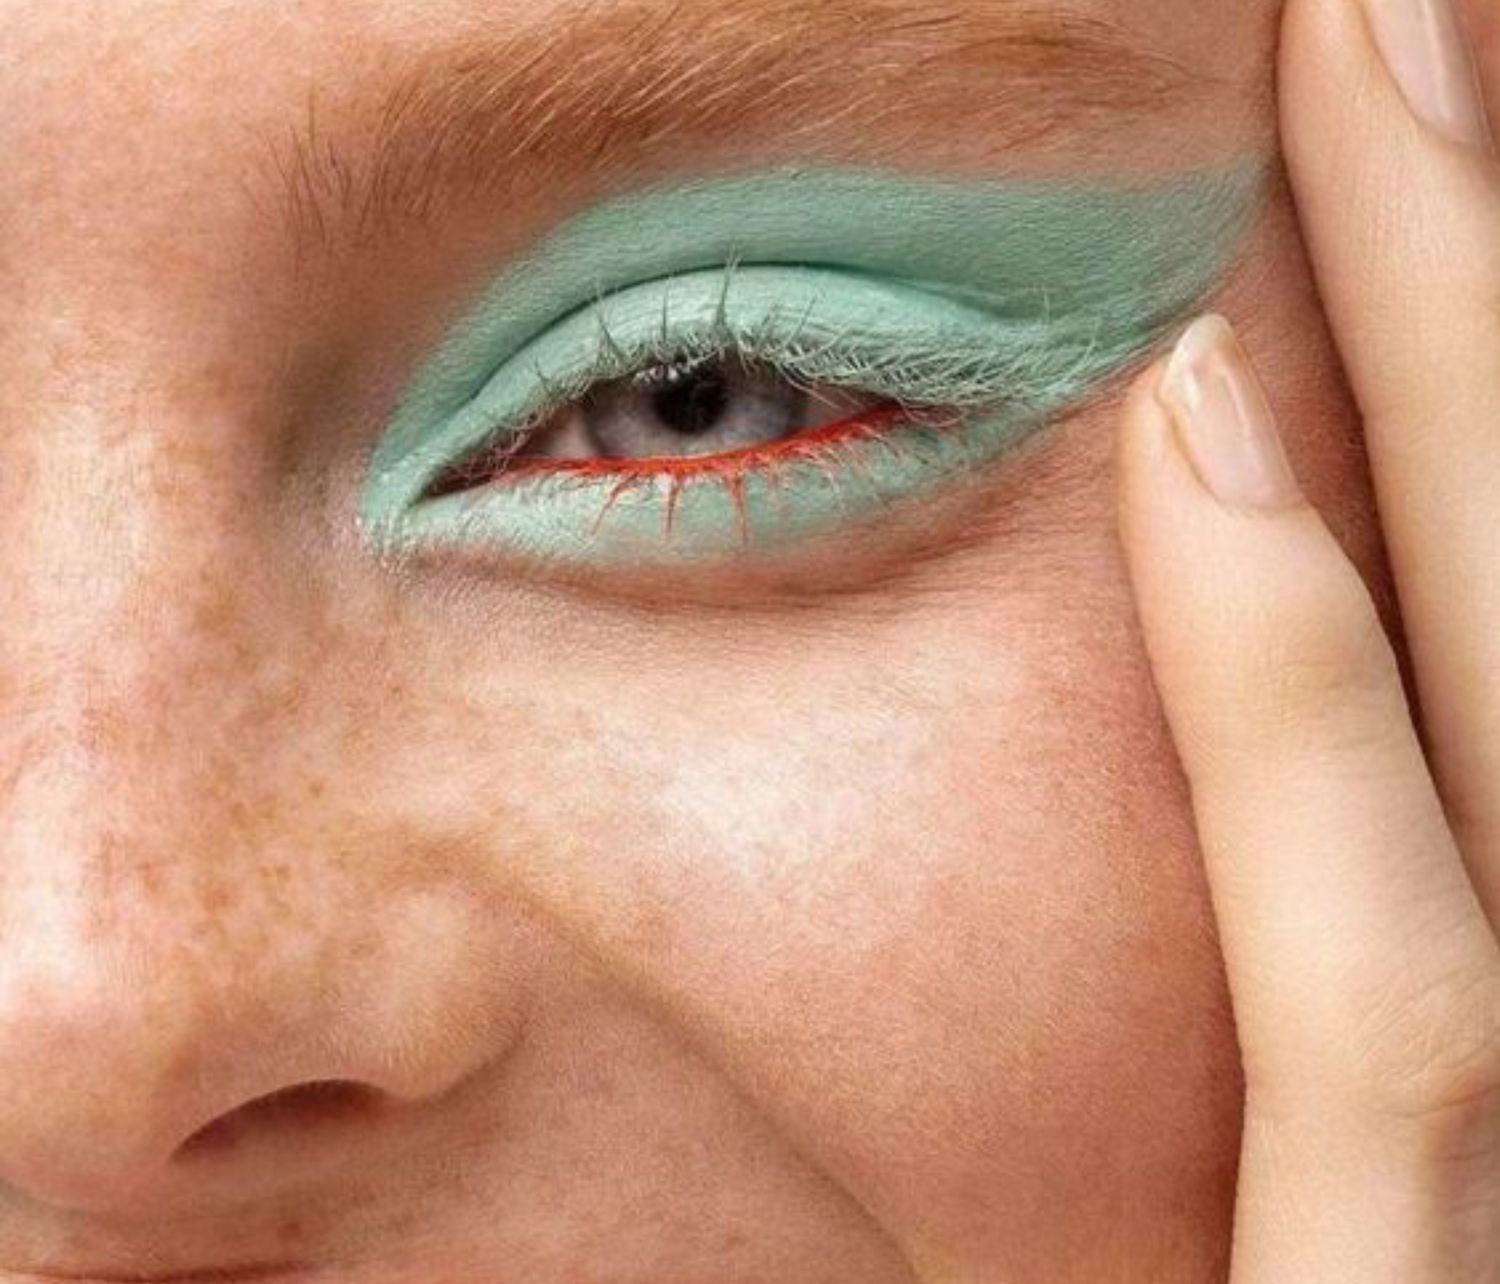 ZERO plastic free wipes girl with green eyeshadow